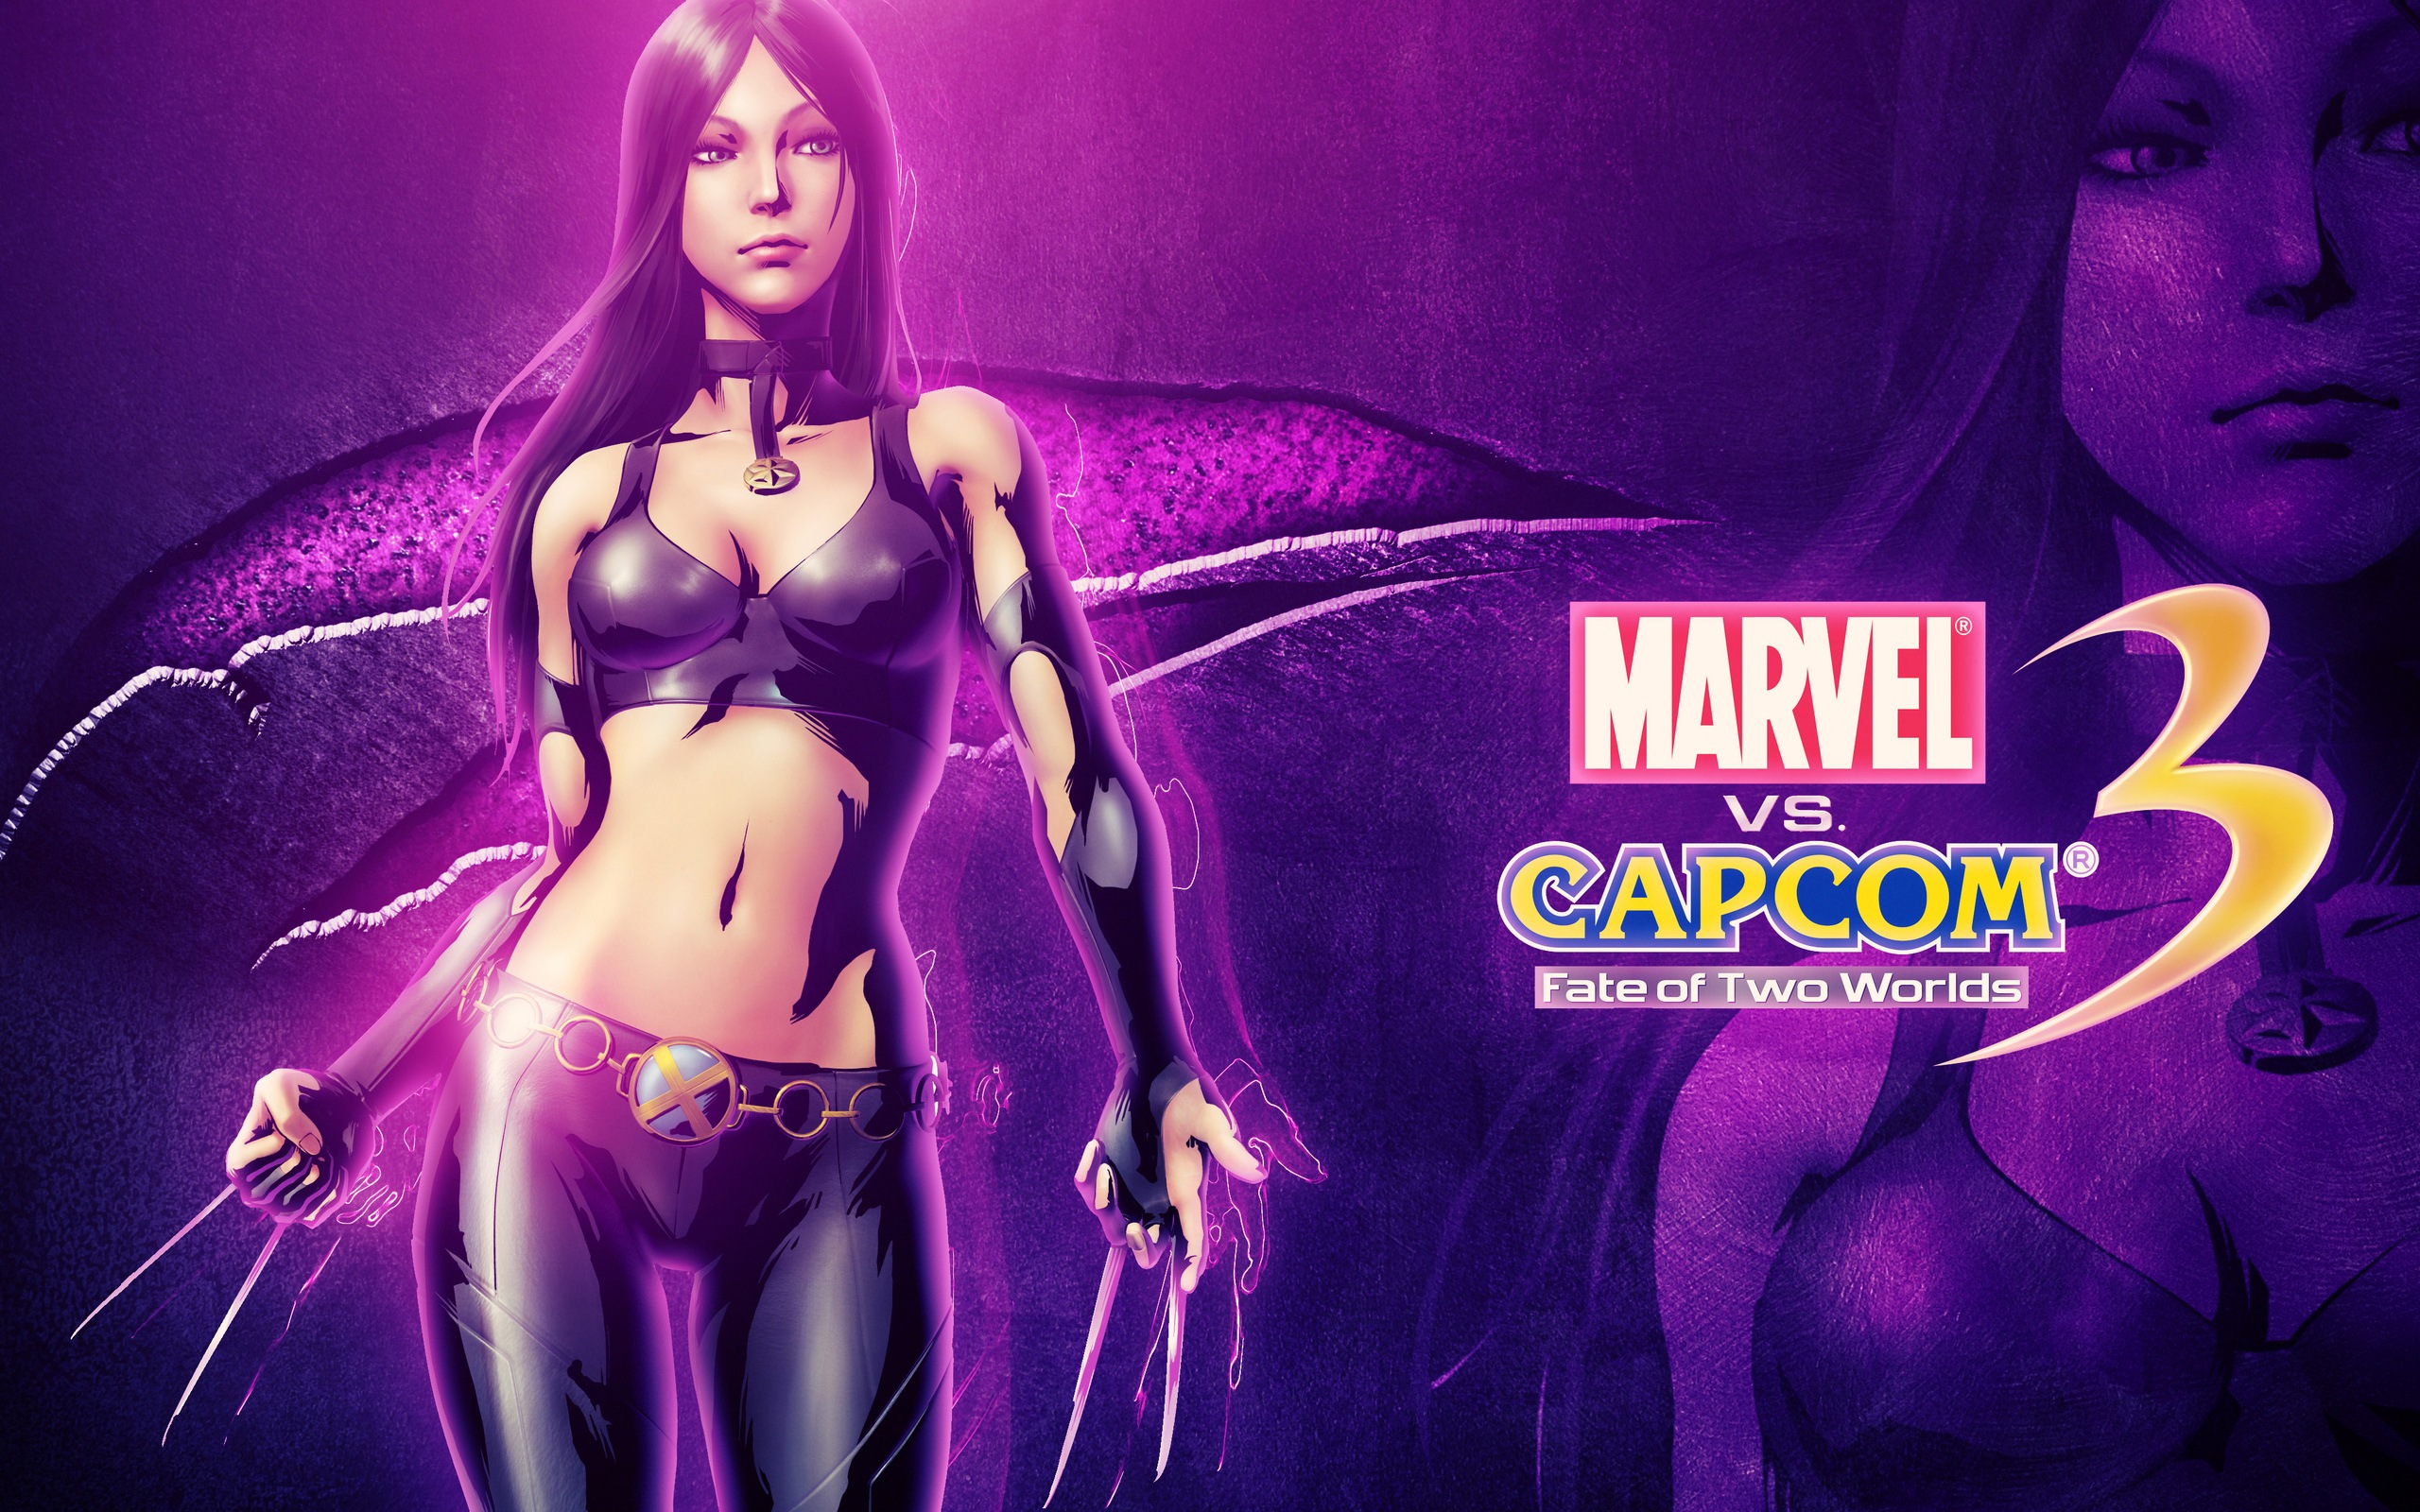 Marvel VS. Capcom 3: Fate of Two Worlds 漫畫英雄VS.卡普空3 高清遊戲壁紙 #10 - 2560x1600